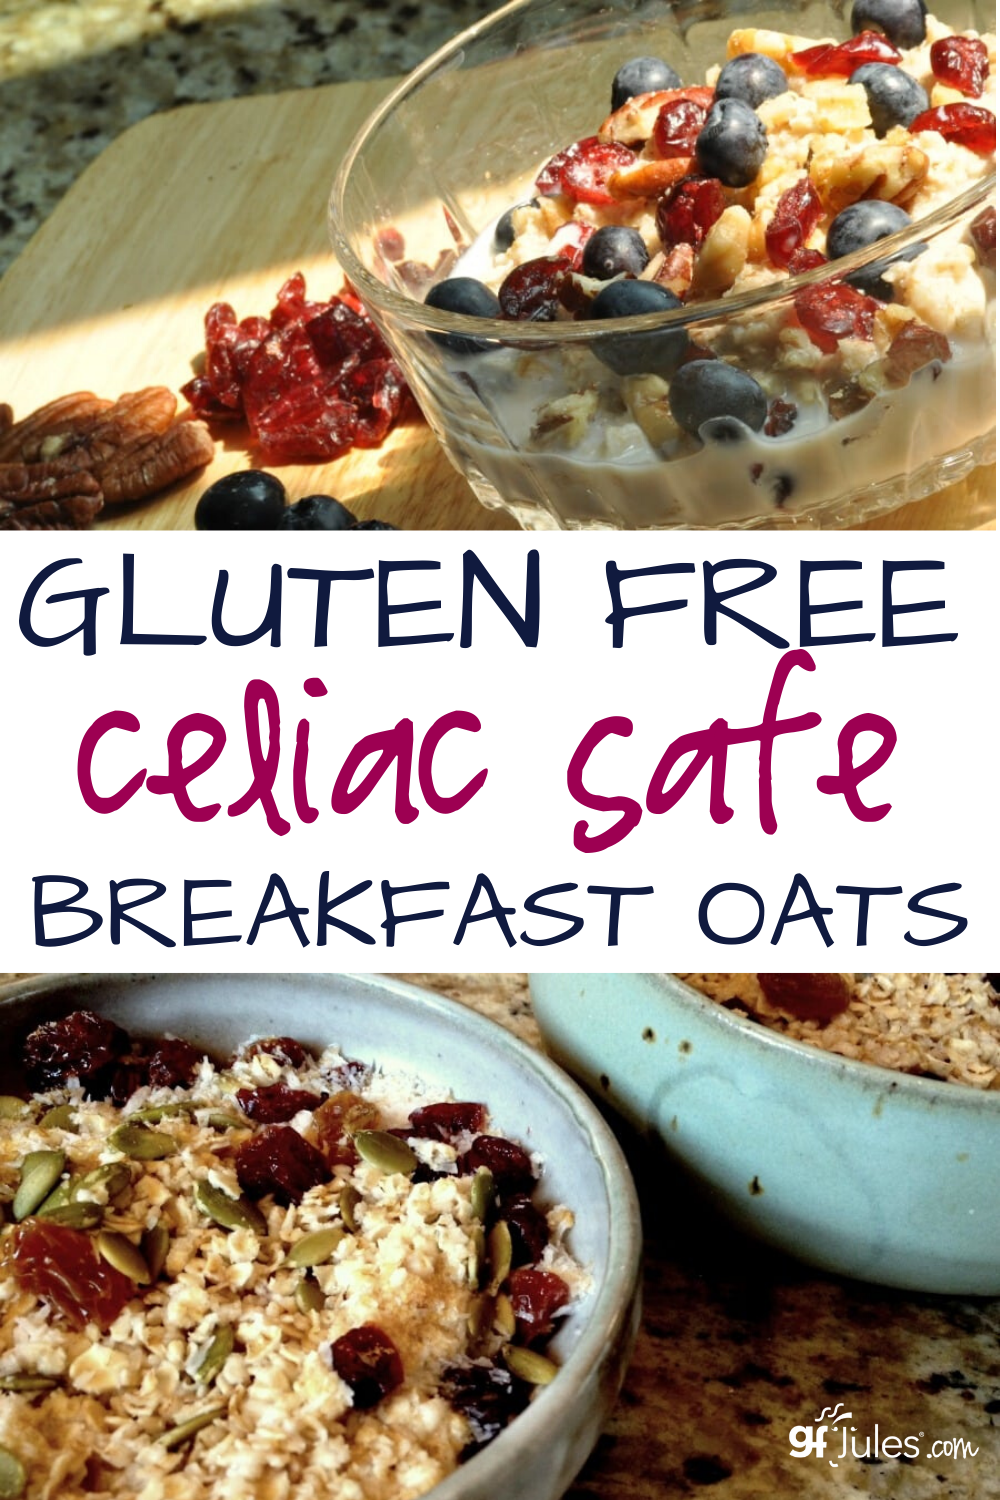 gluten-free-oats-safe-for-celiacs-gluten-free-recipes-gfjules